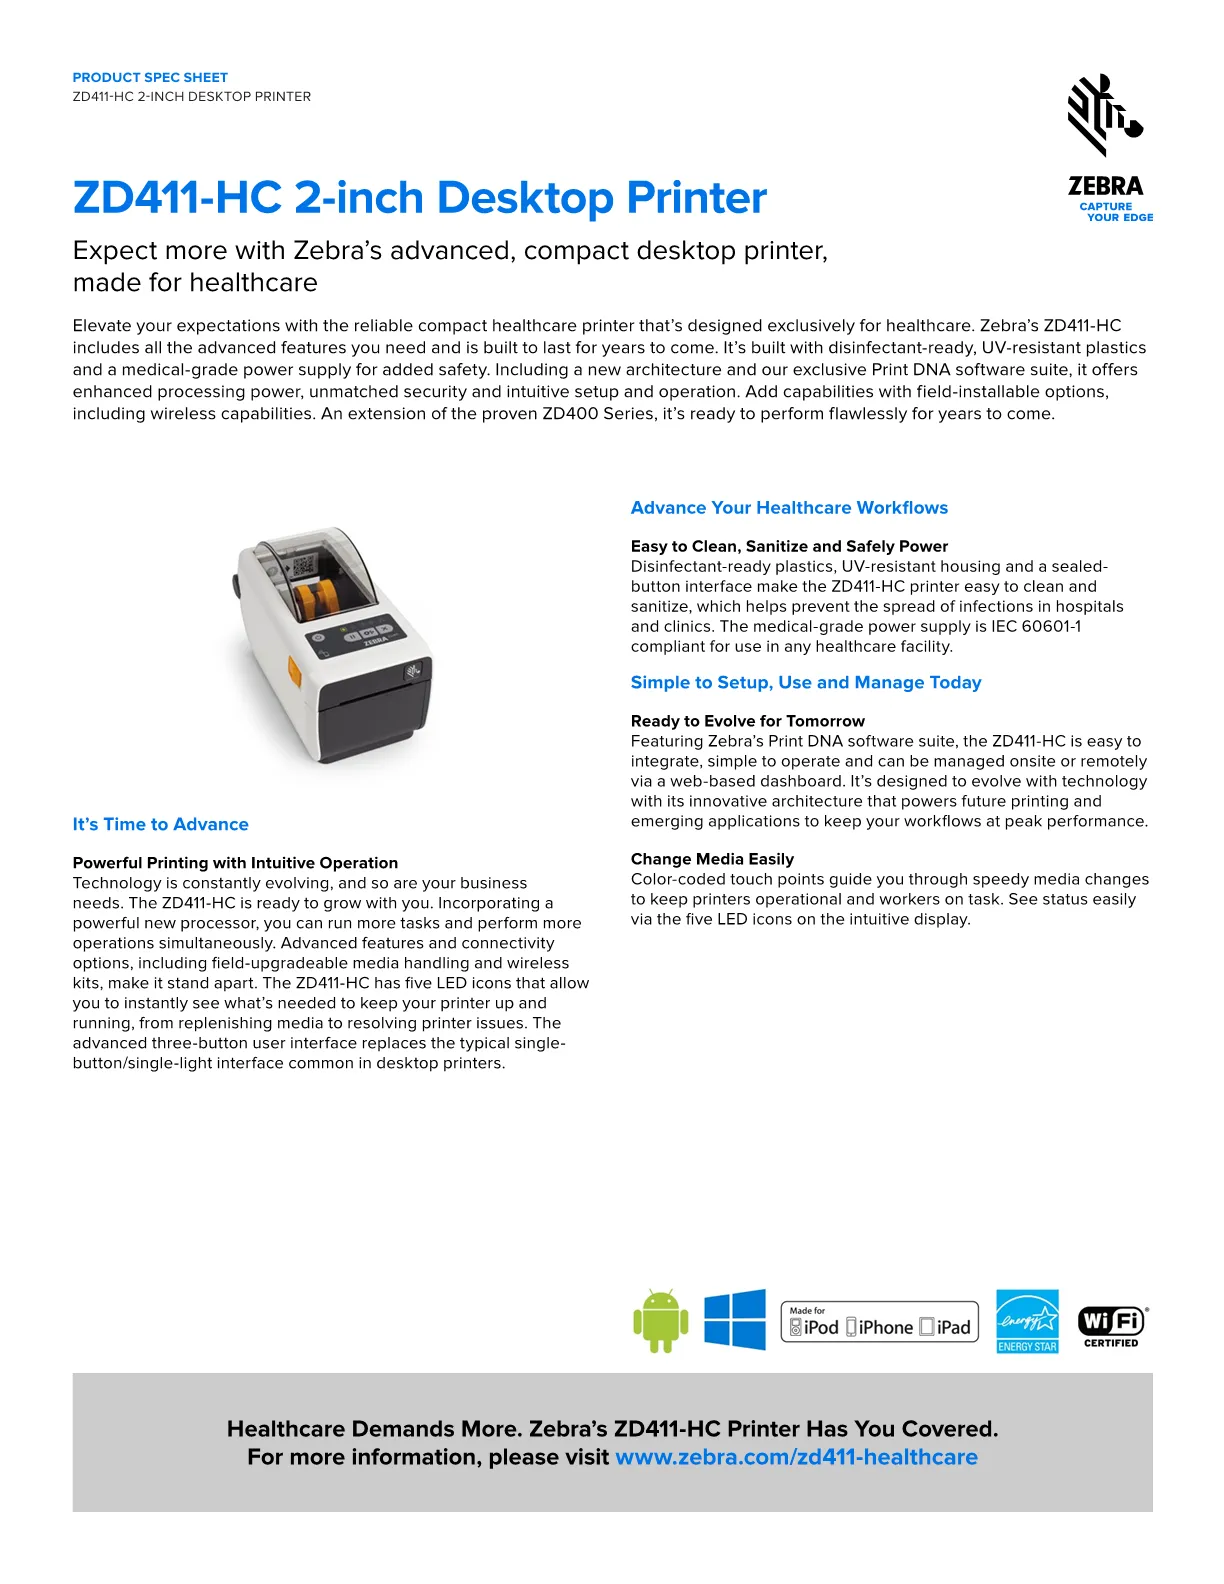 ZEBRA Direct Thermal Printer ZD411; 203 dpi, USB, USB Host, Ethernet, BTLE5, US Cord, Swiss Font, EZPL - 4